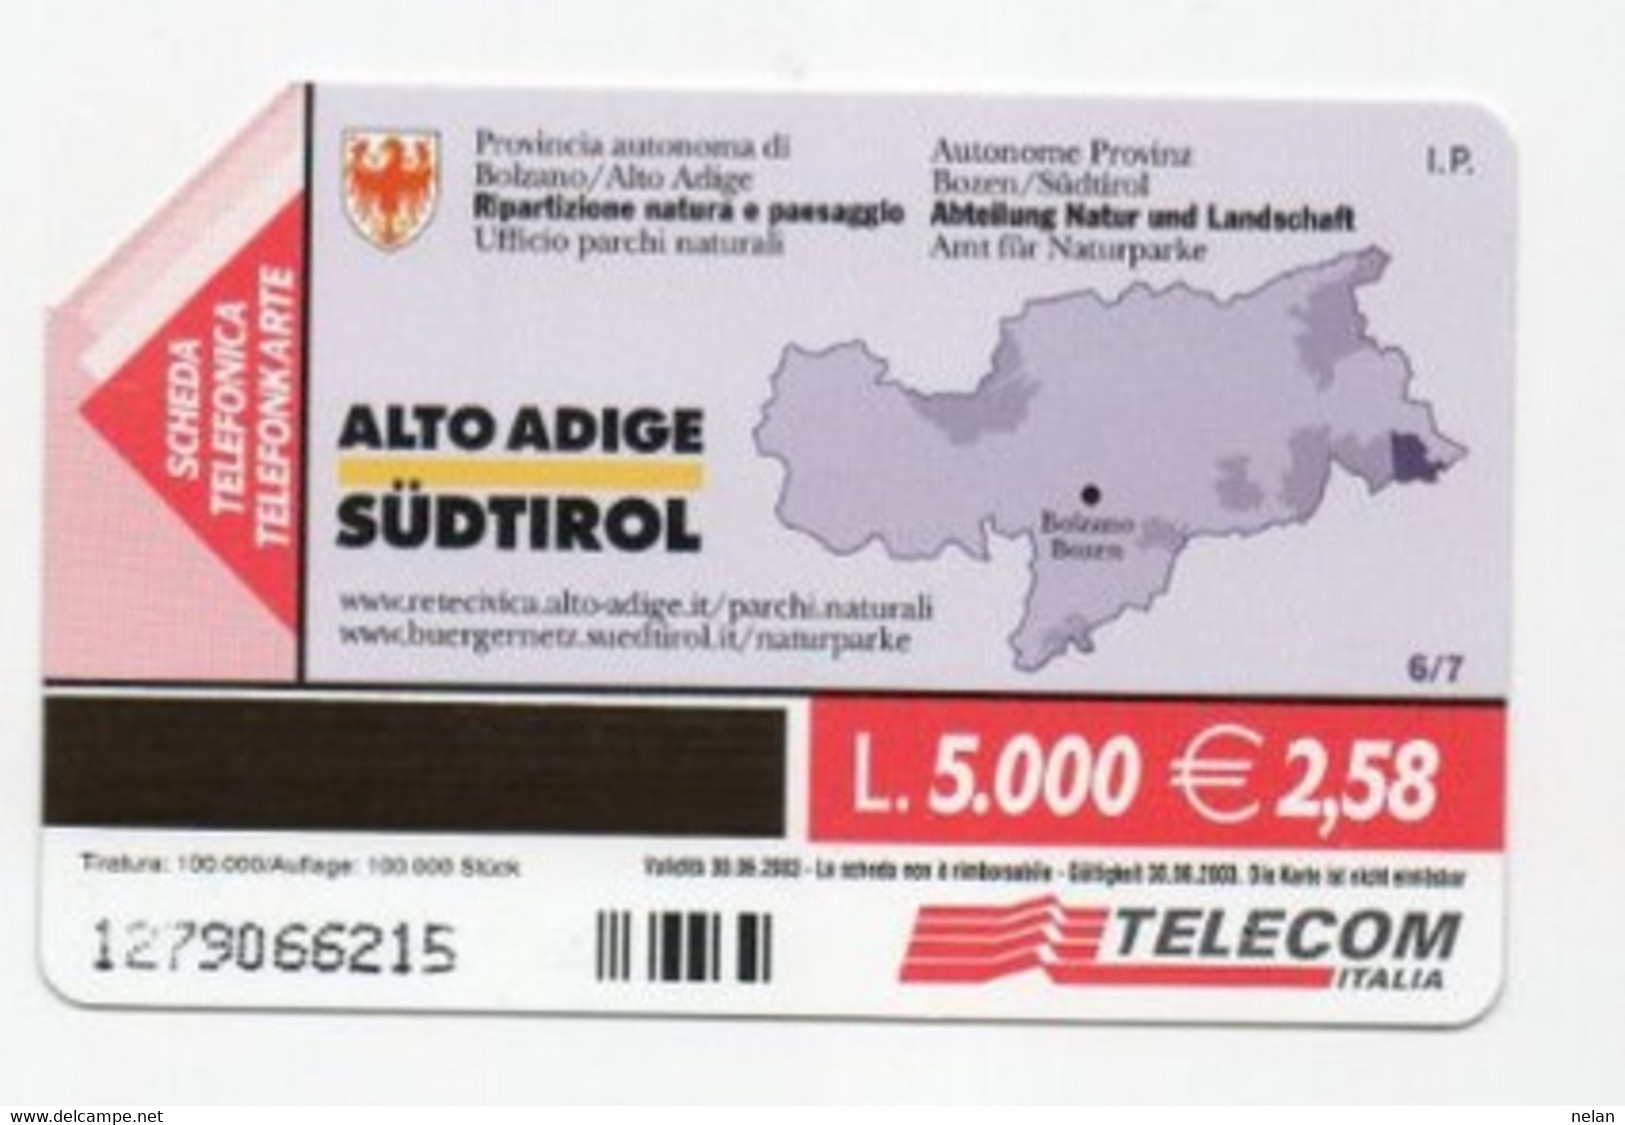 SCHEDA TELEFONICA - PHONE CARD - ITALIA - TELECOM - ALTO ADIGE - Montagne